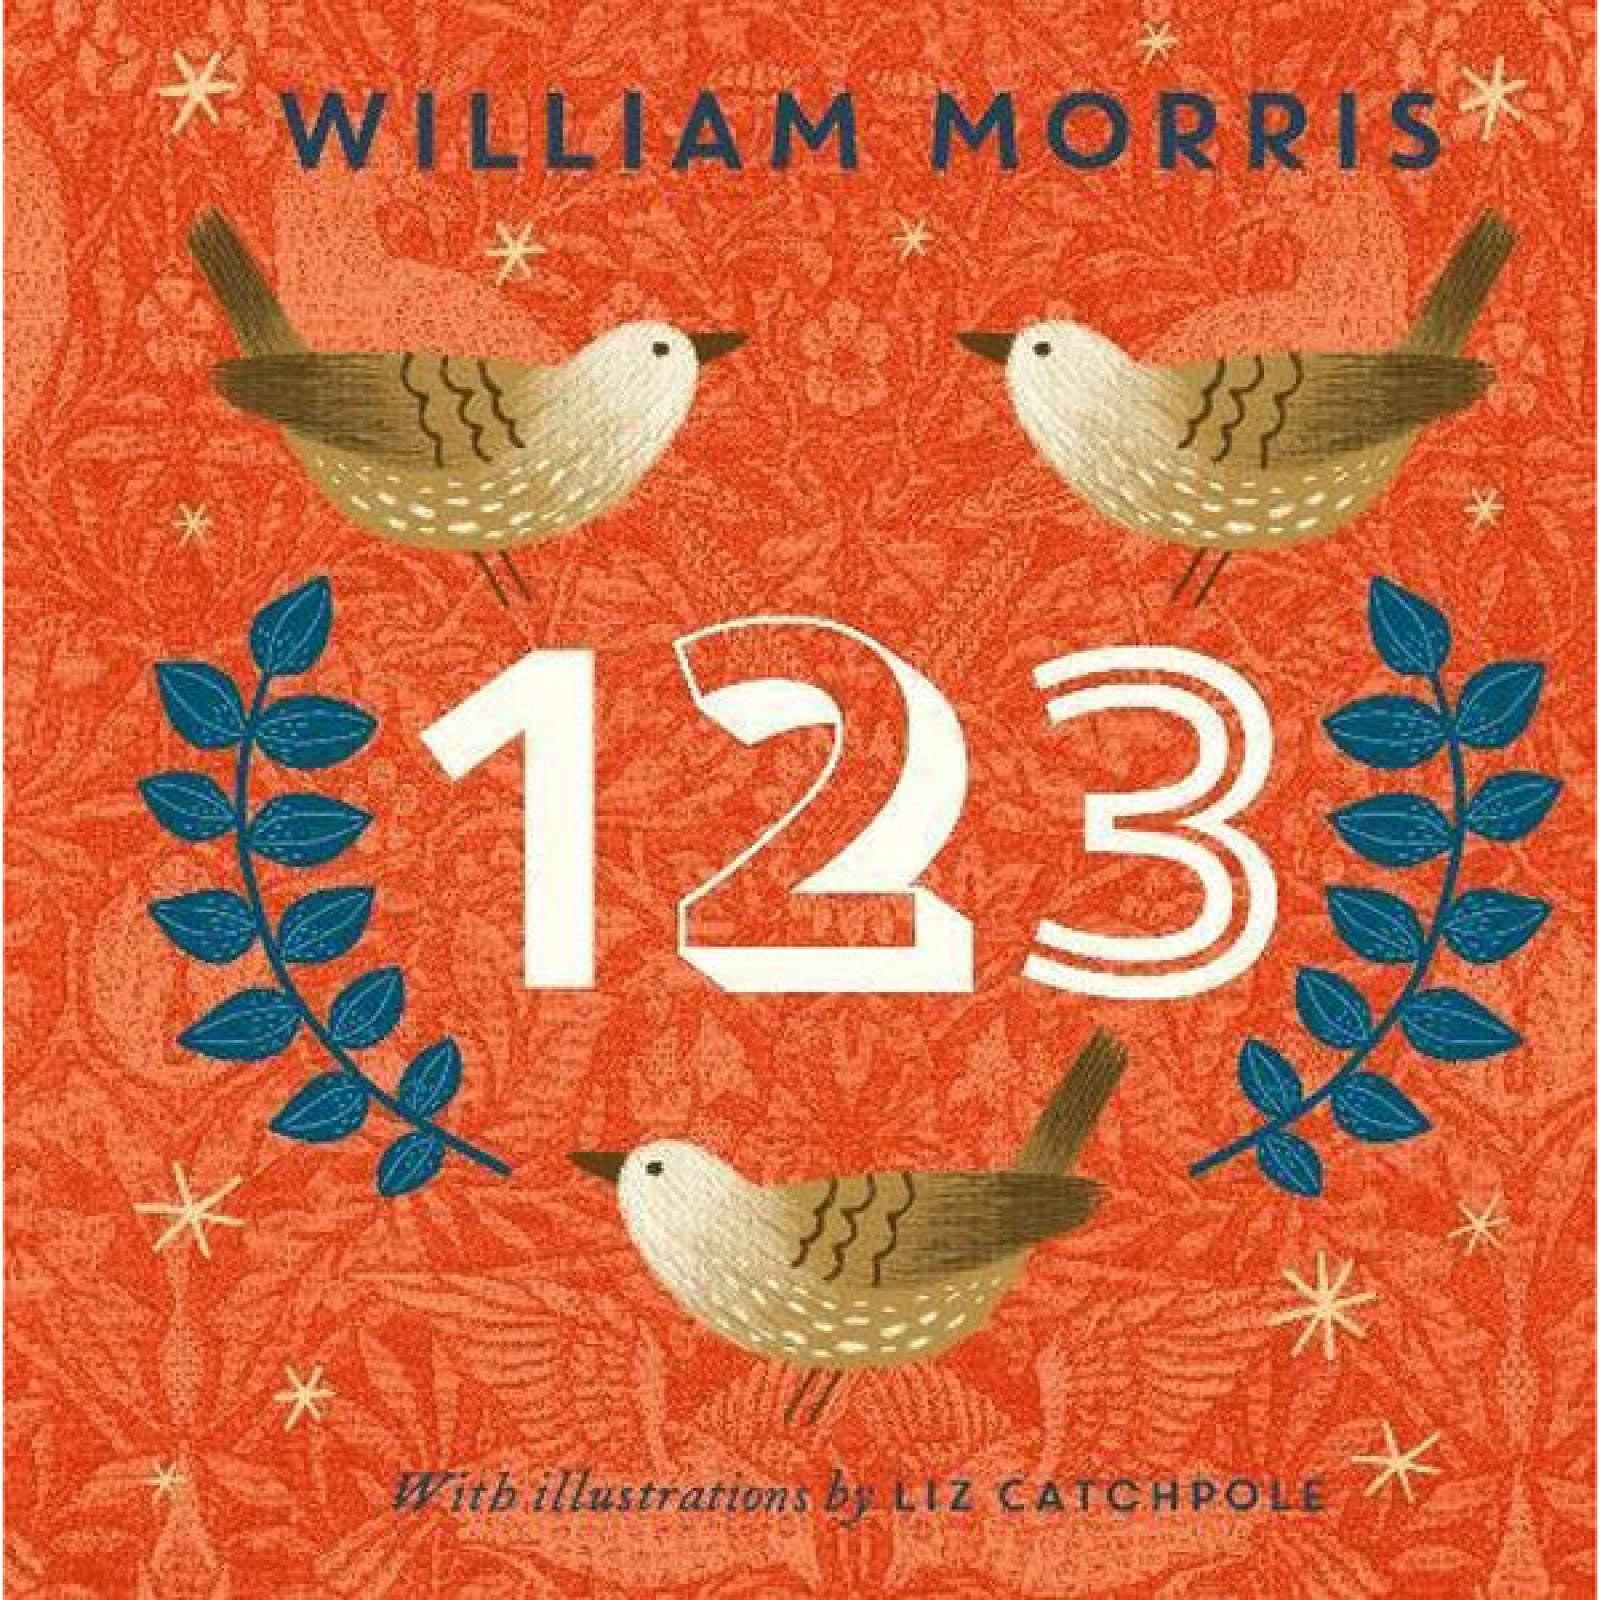 William Morris 123 Board Book V&A